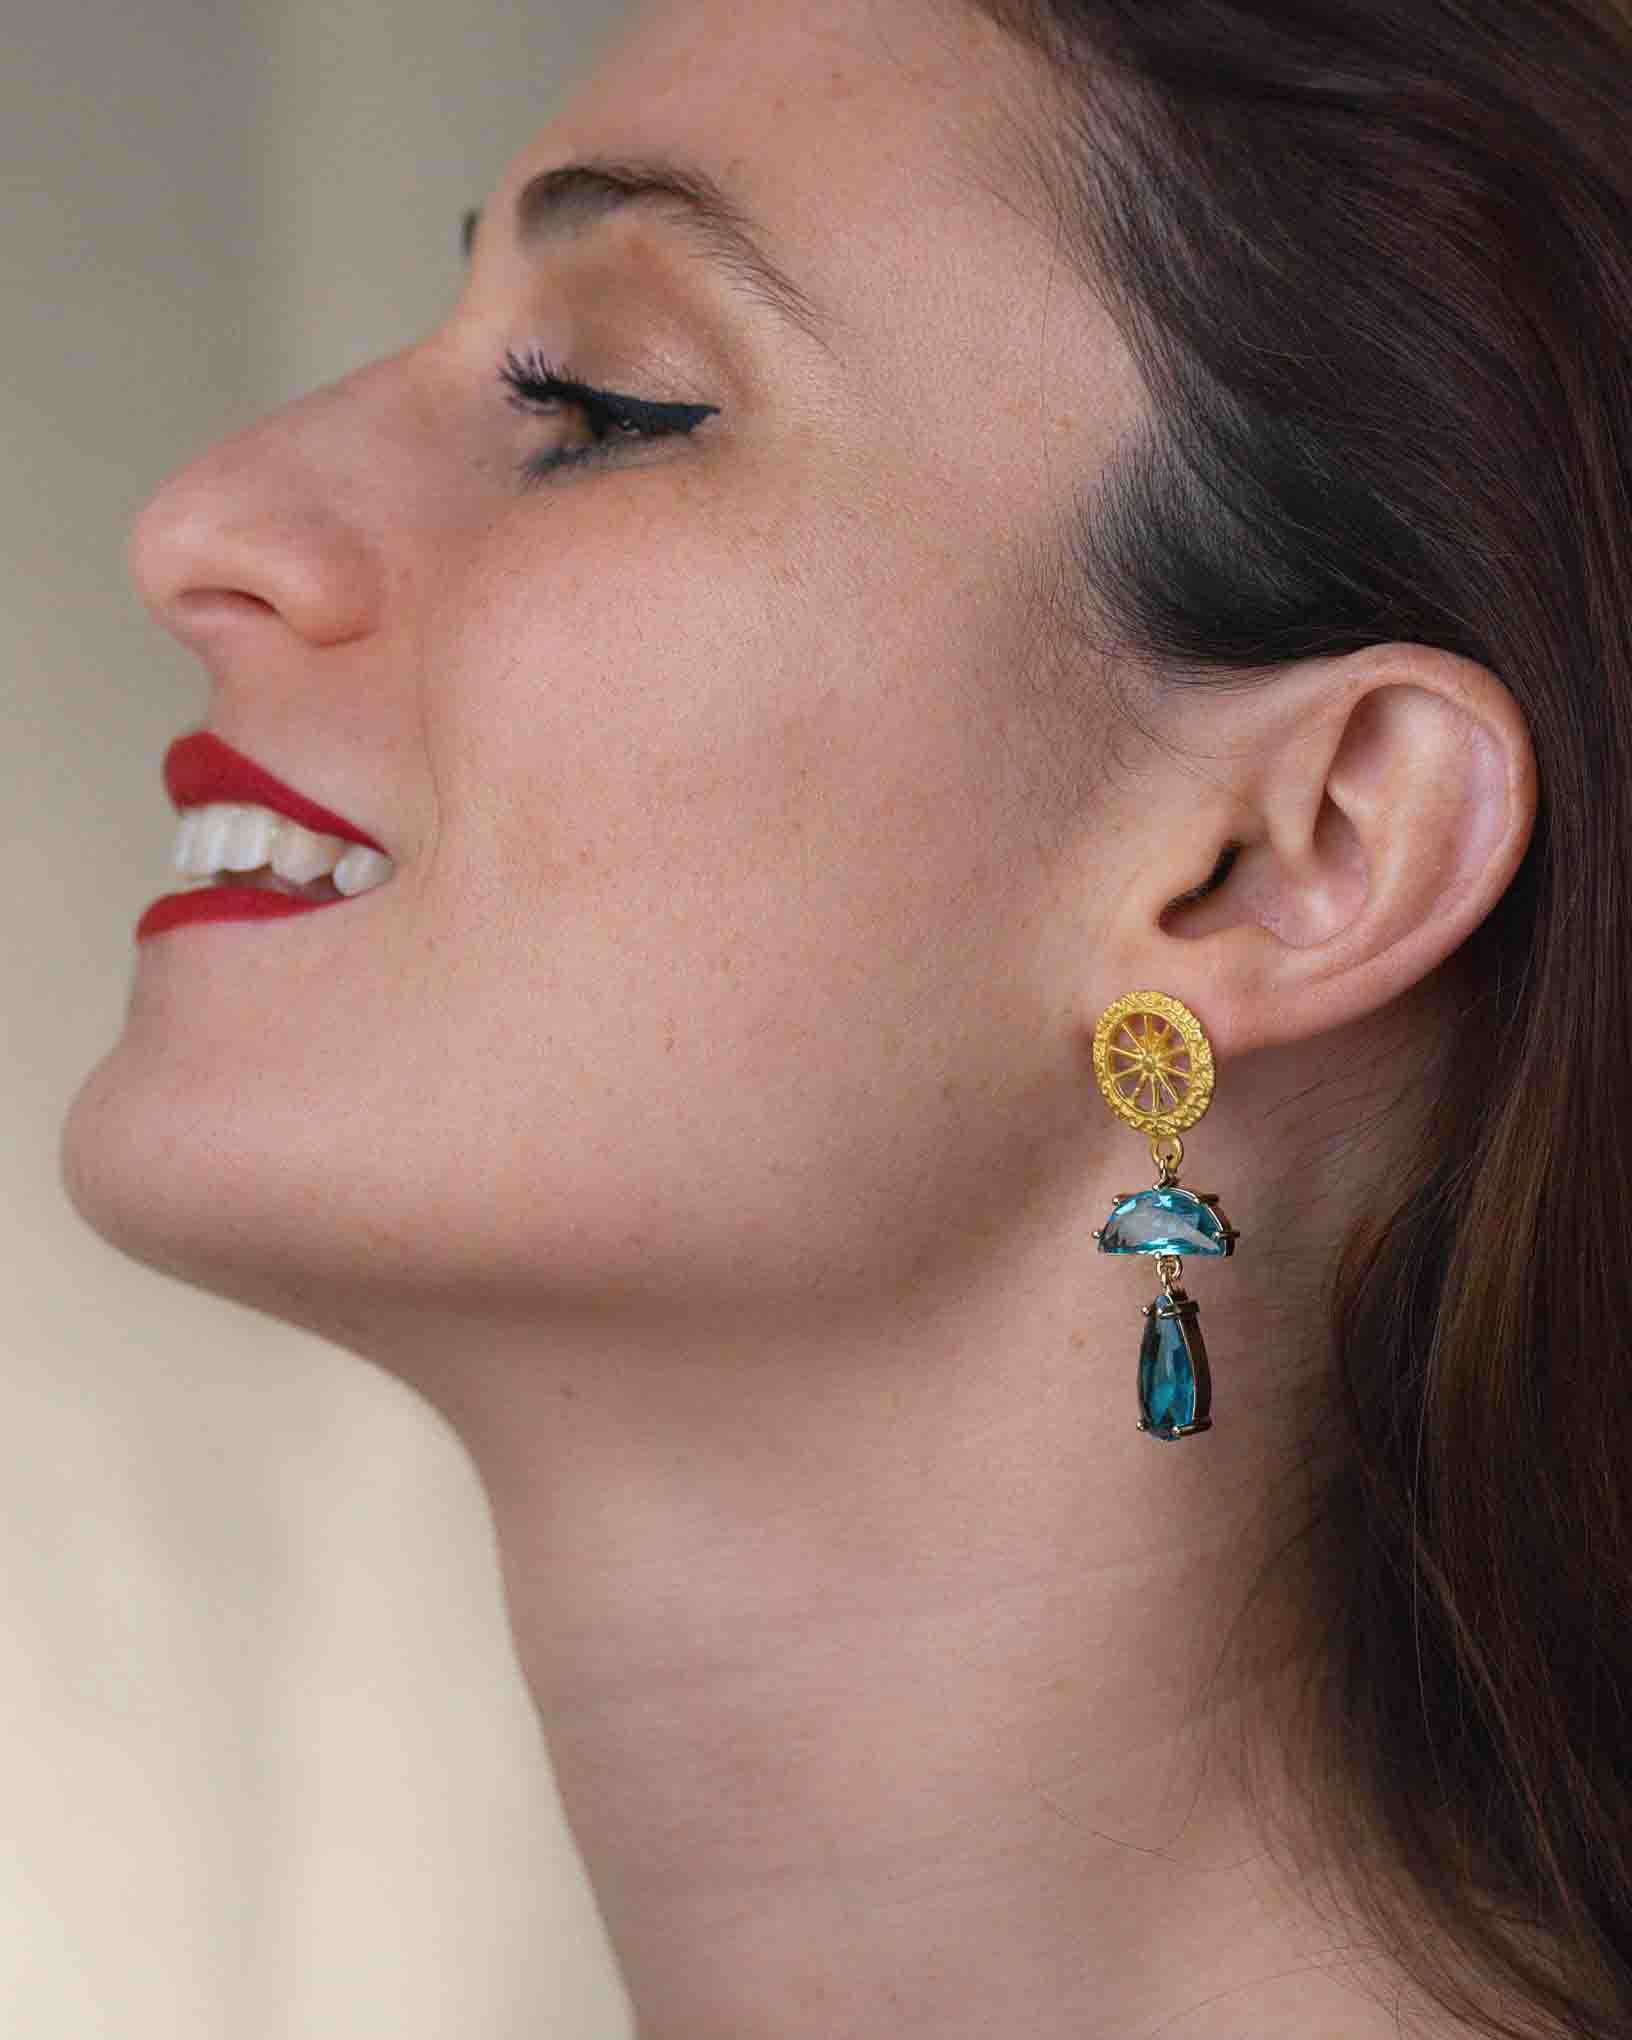 Ohrring Marina della Lobra aus der Kollektion I Classici von Donna Rachele Jewelry